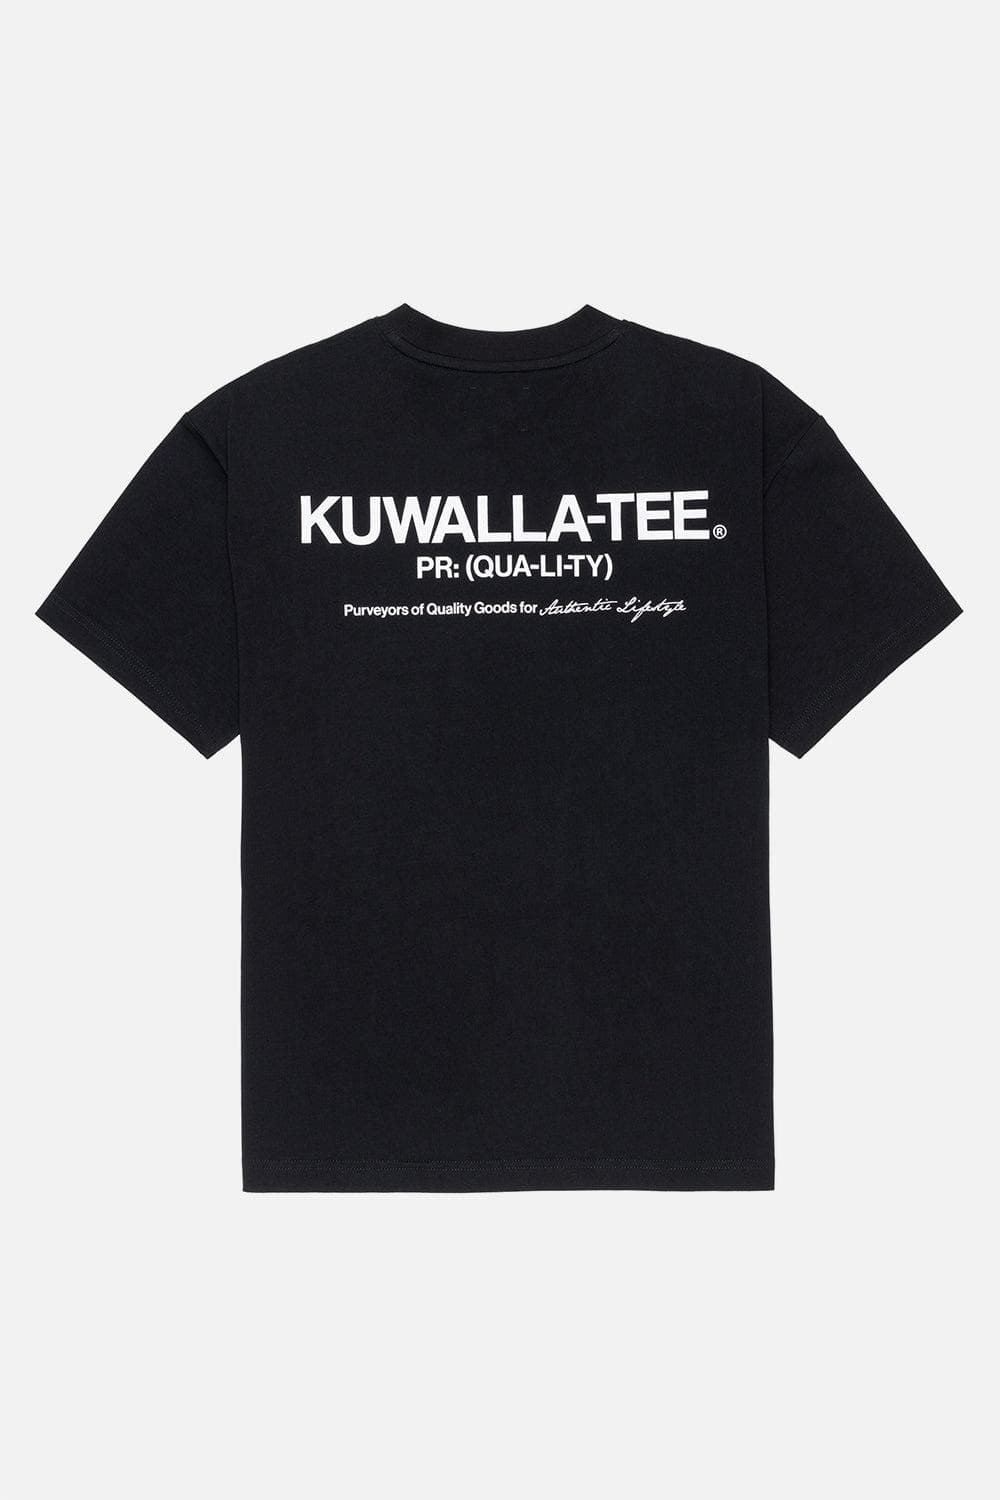 Kuwalla Tee t shirt - medium – PoppinTags